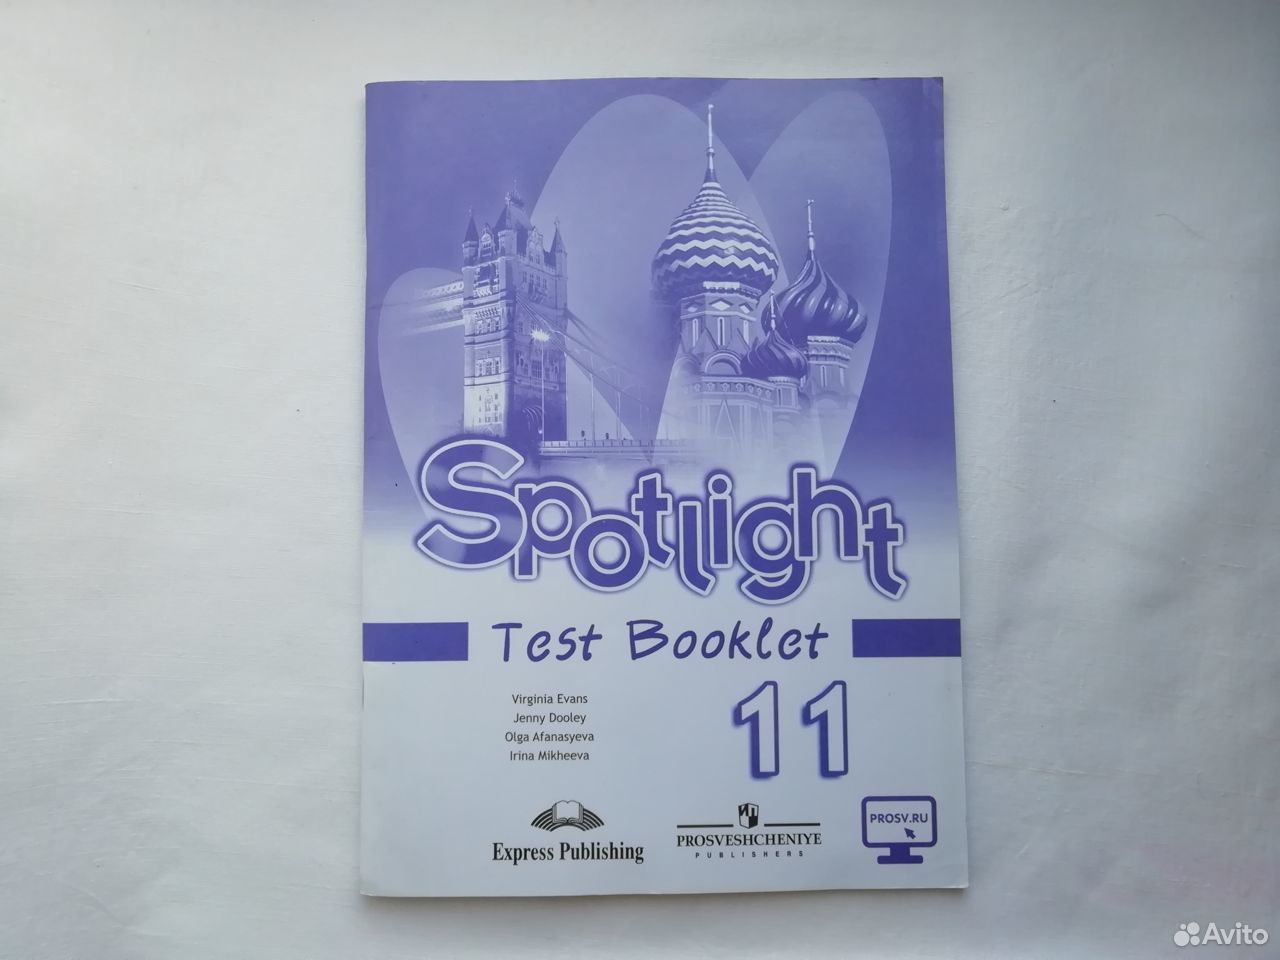 Английский язык test book. Test booklet 11 класс Spotlight. Тест буклет 11 класс Spotlight. Спотлайт 8 тест буклет. Тест буклет спотлайт 11 класс ответы.